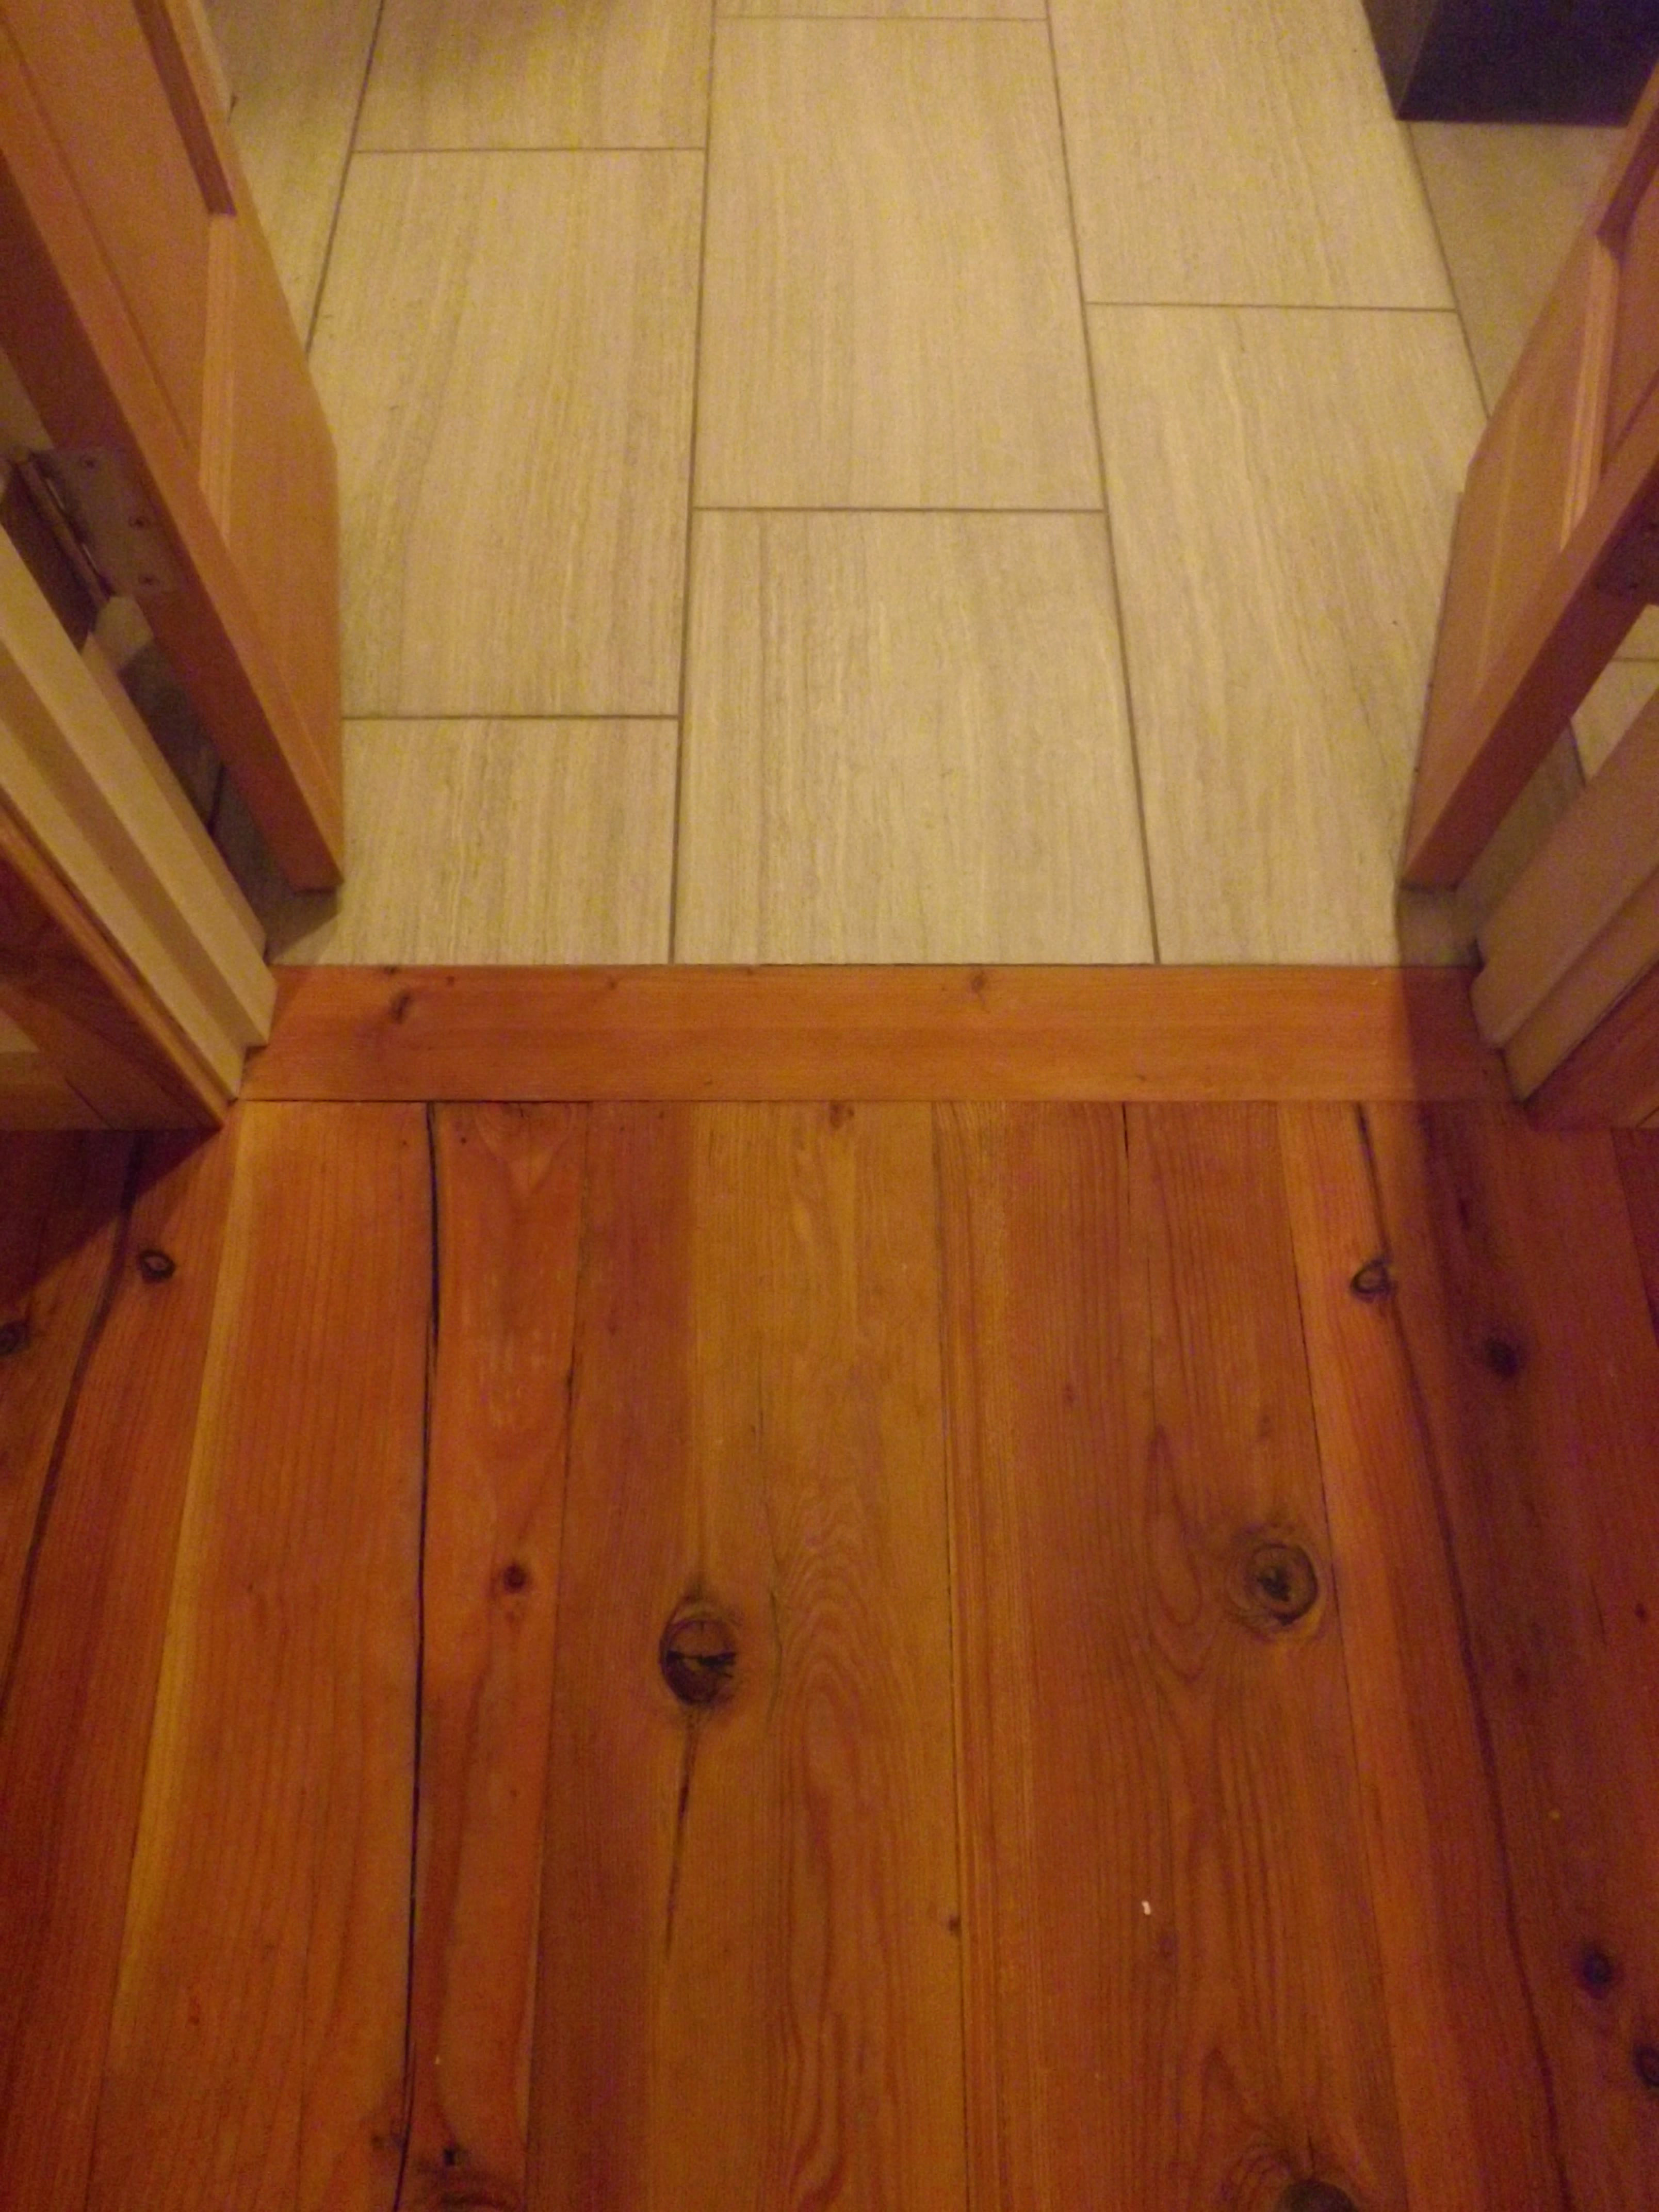 hardwood floor refinishing charlotte nc of wood floorings in netherlands archives wlcu regarding wood flooring charlotte nc inspirational tile to wood floor transition